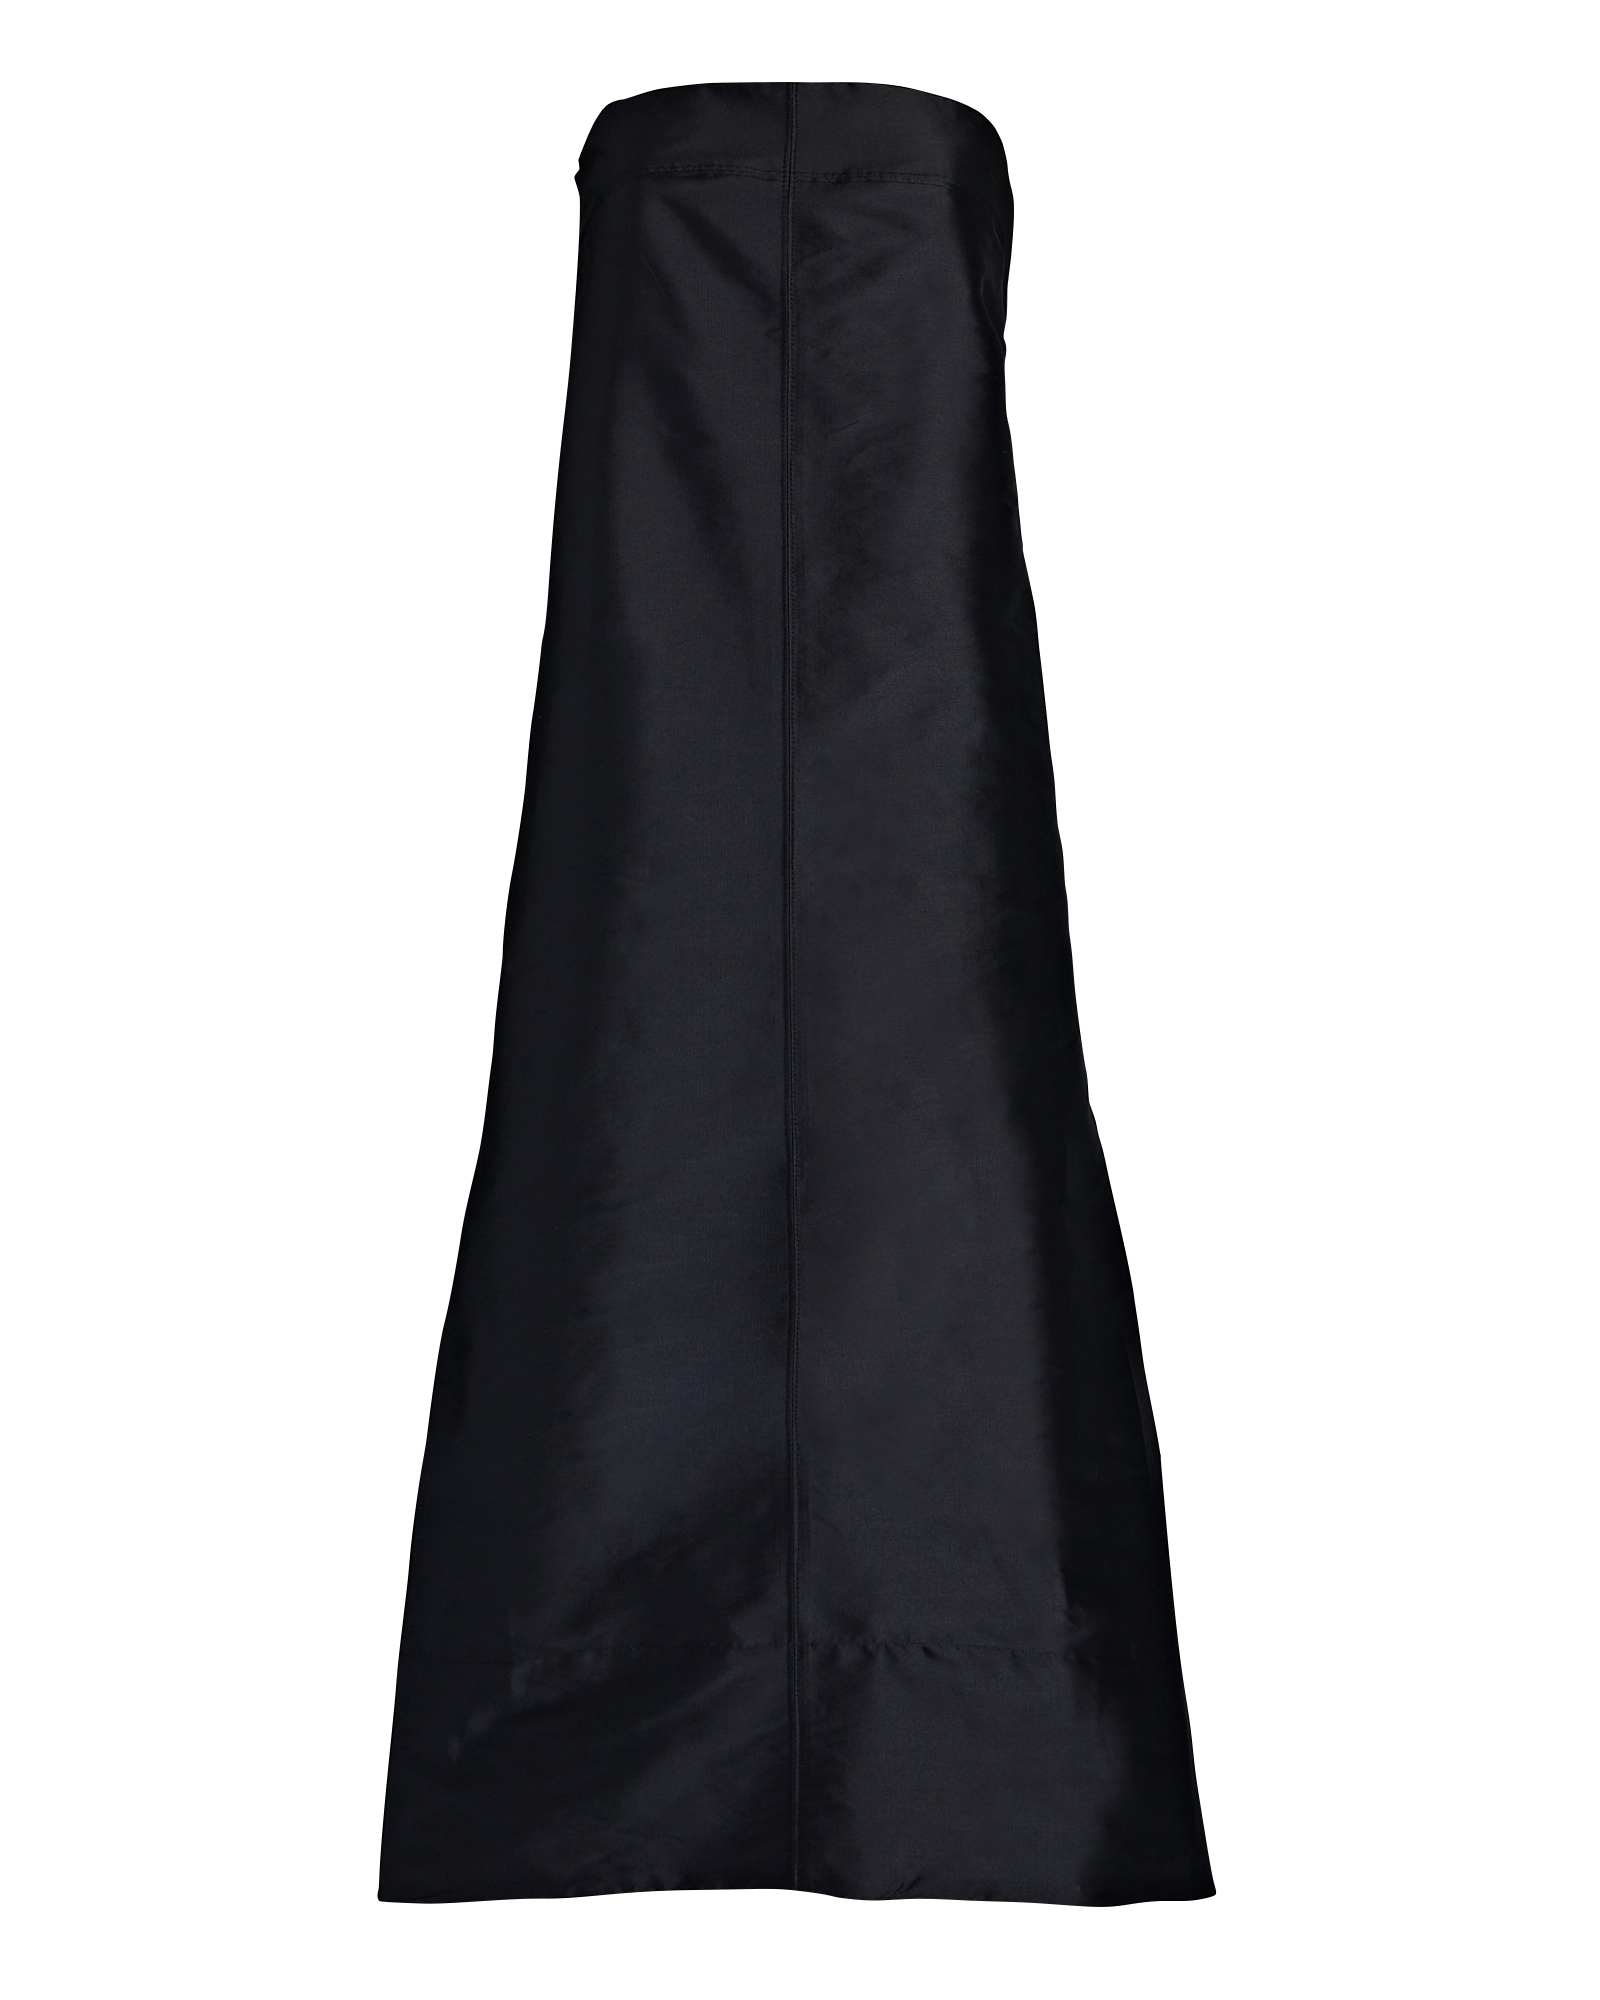 MANNING CARTELL Kinetic Abstractions Taffeta Midi Dress in black ...